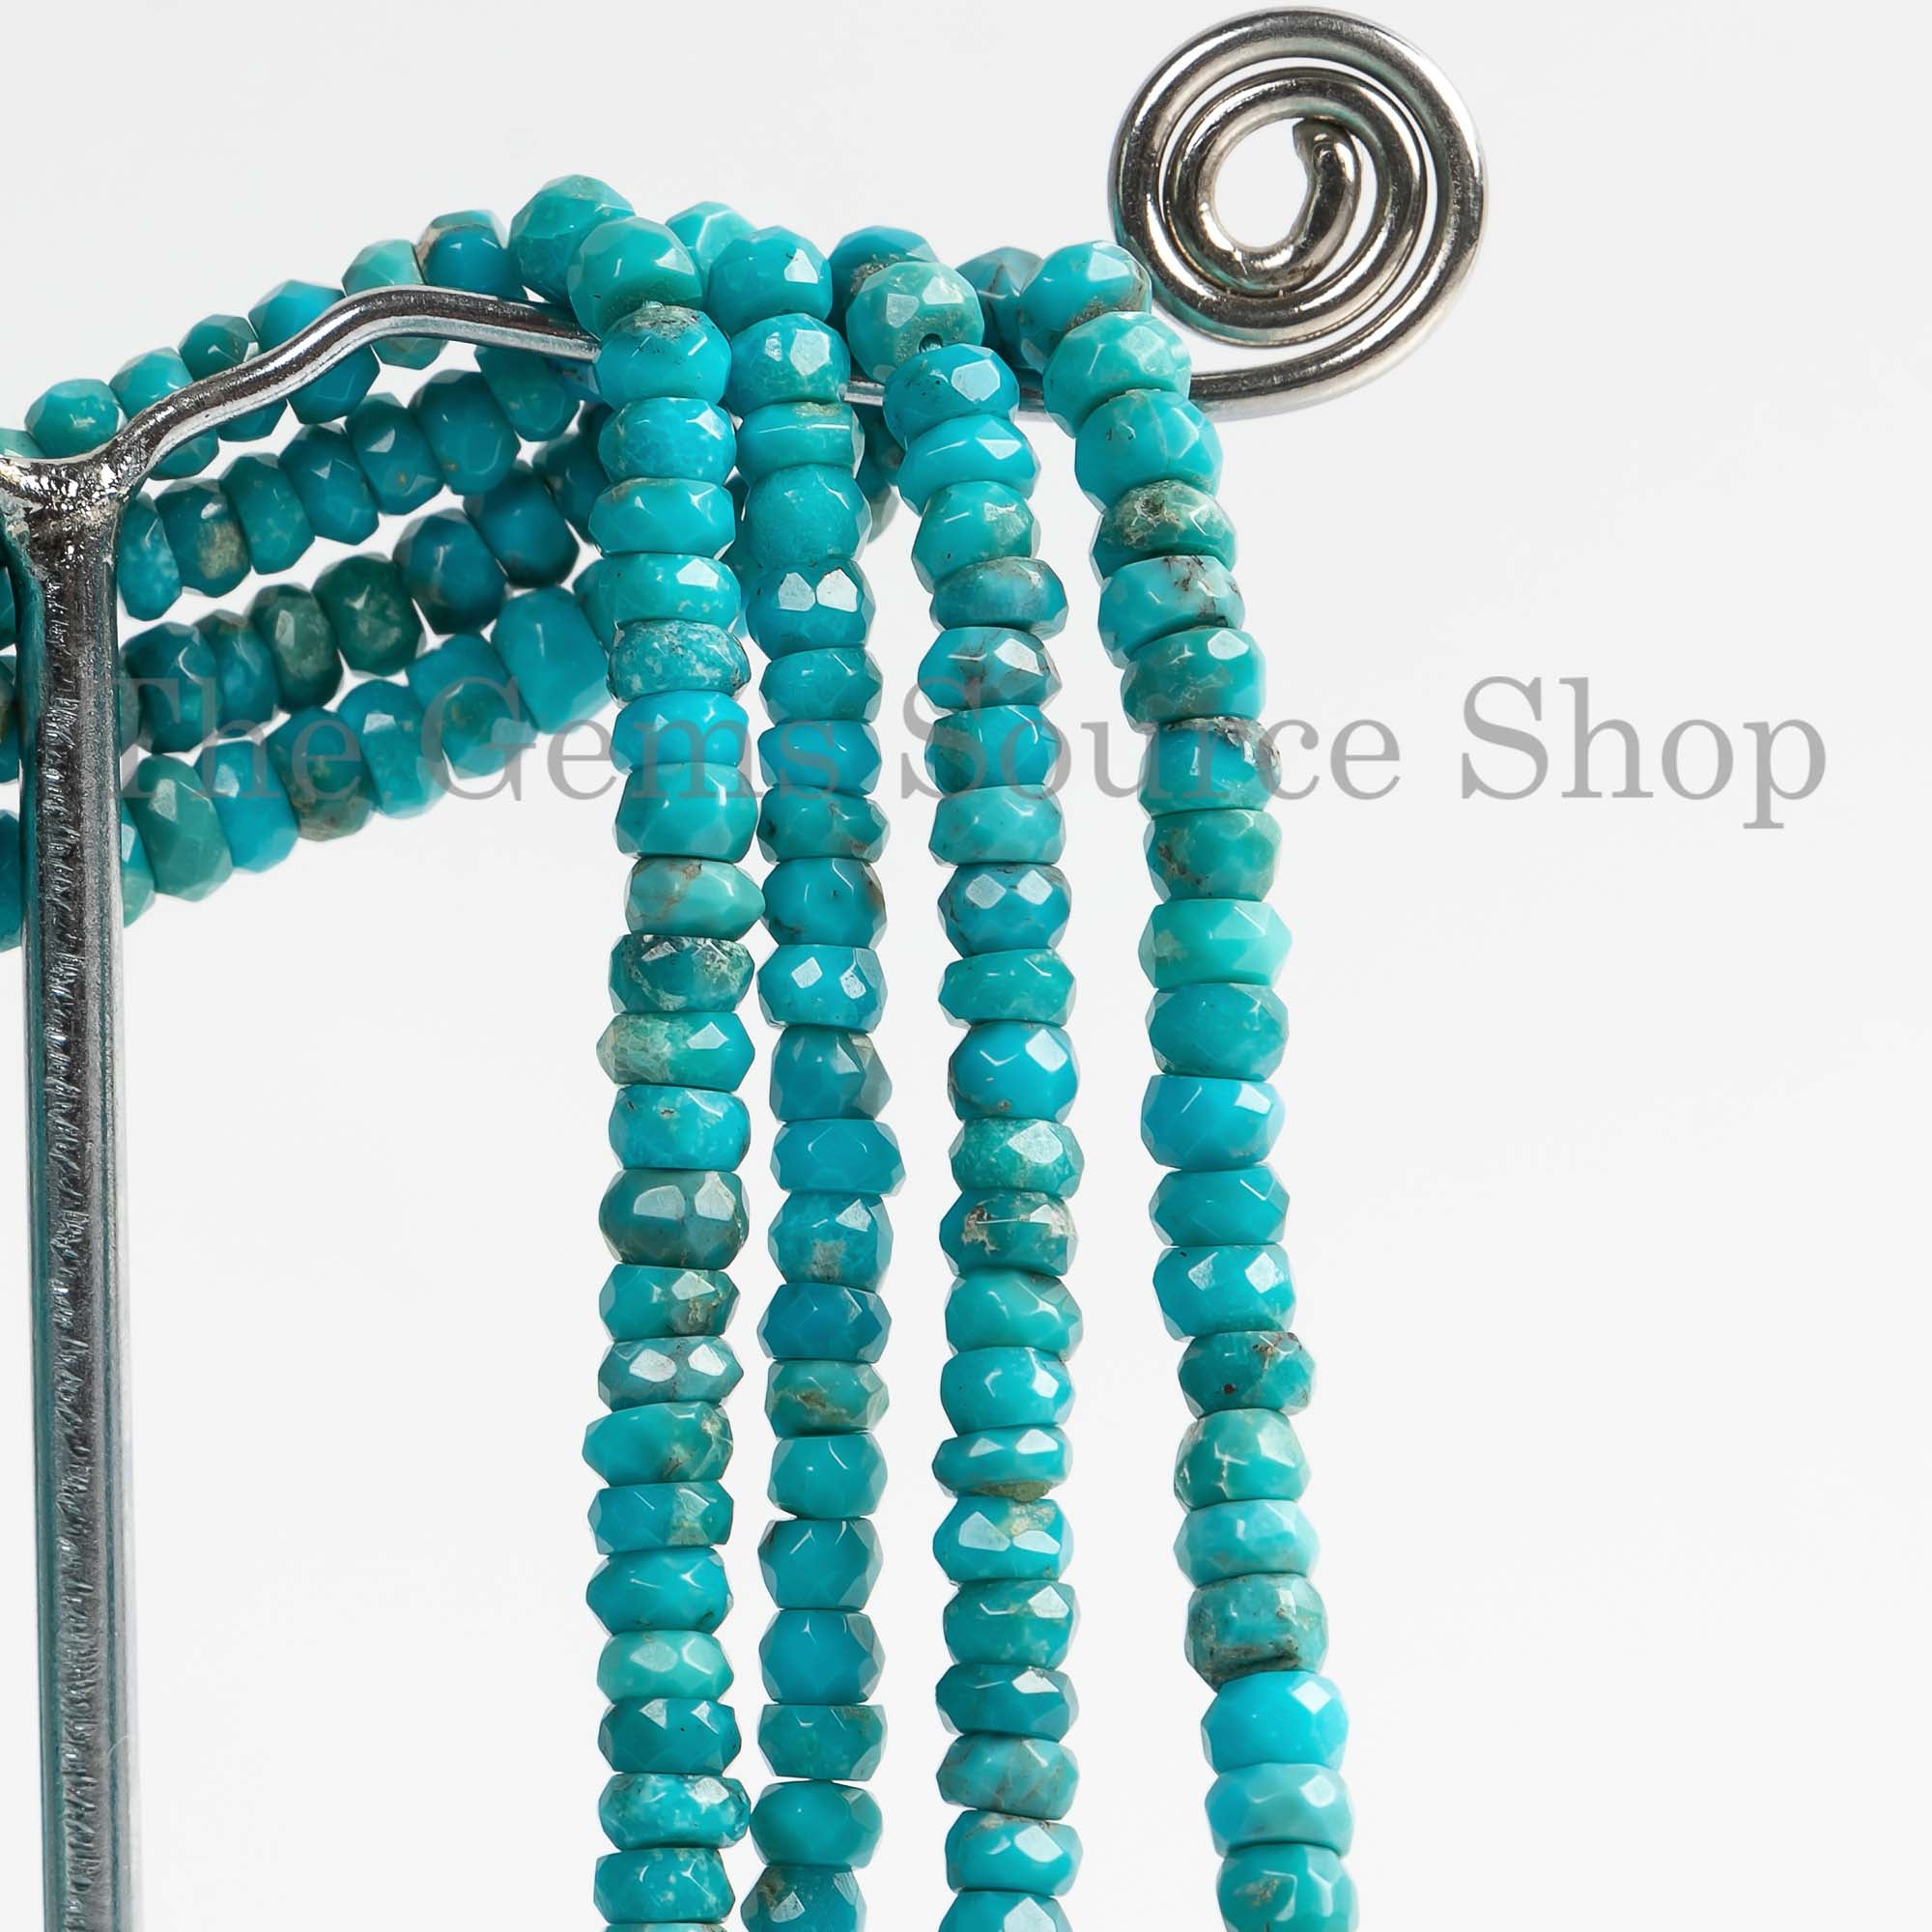 Arizona Turquoise Beads